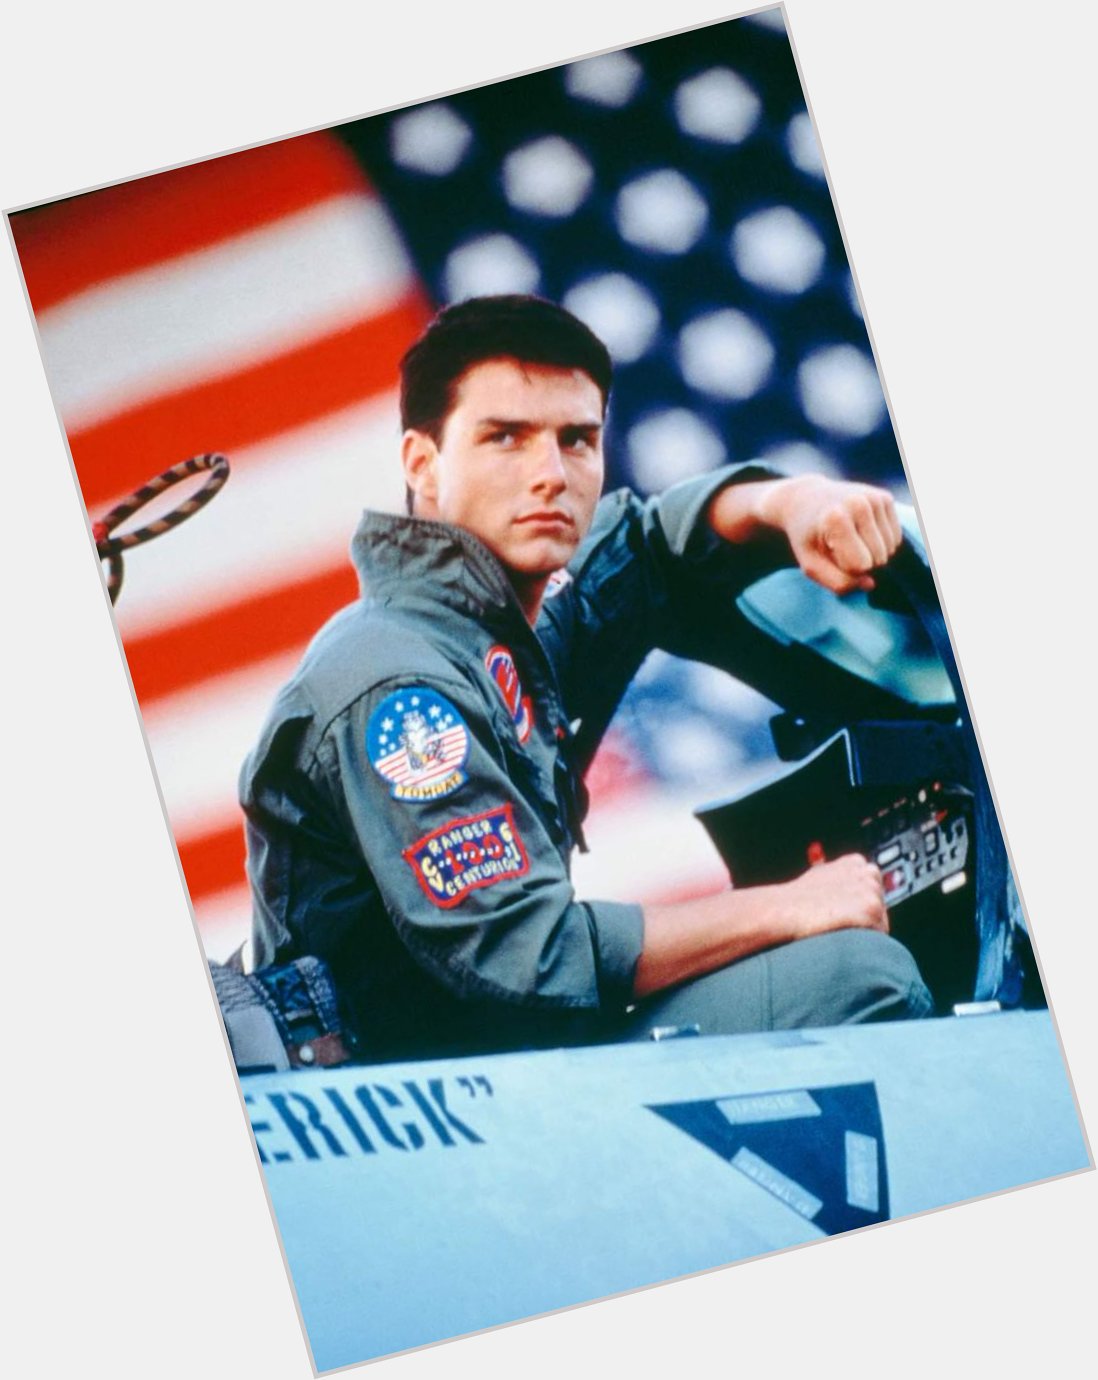 Happy 53rd birthday to Tom Cruise! 